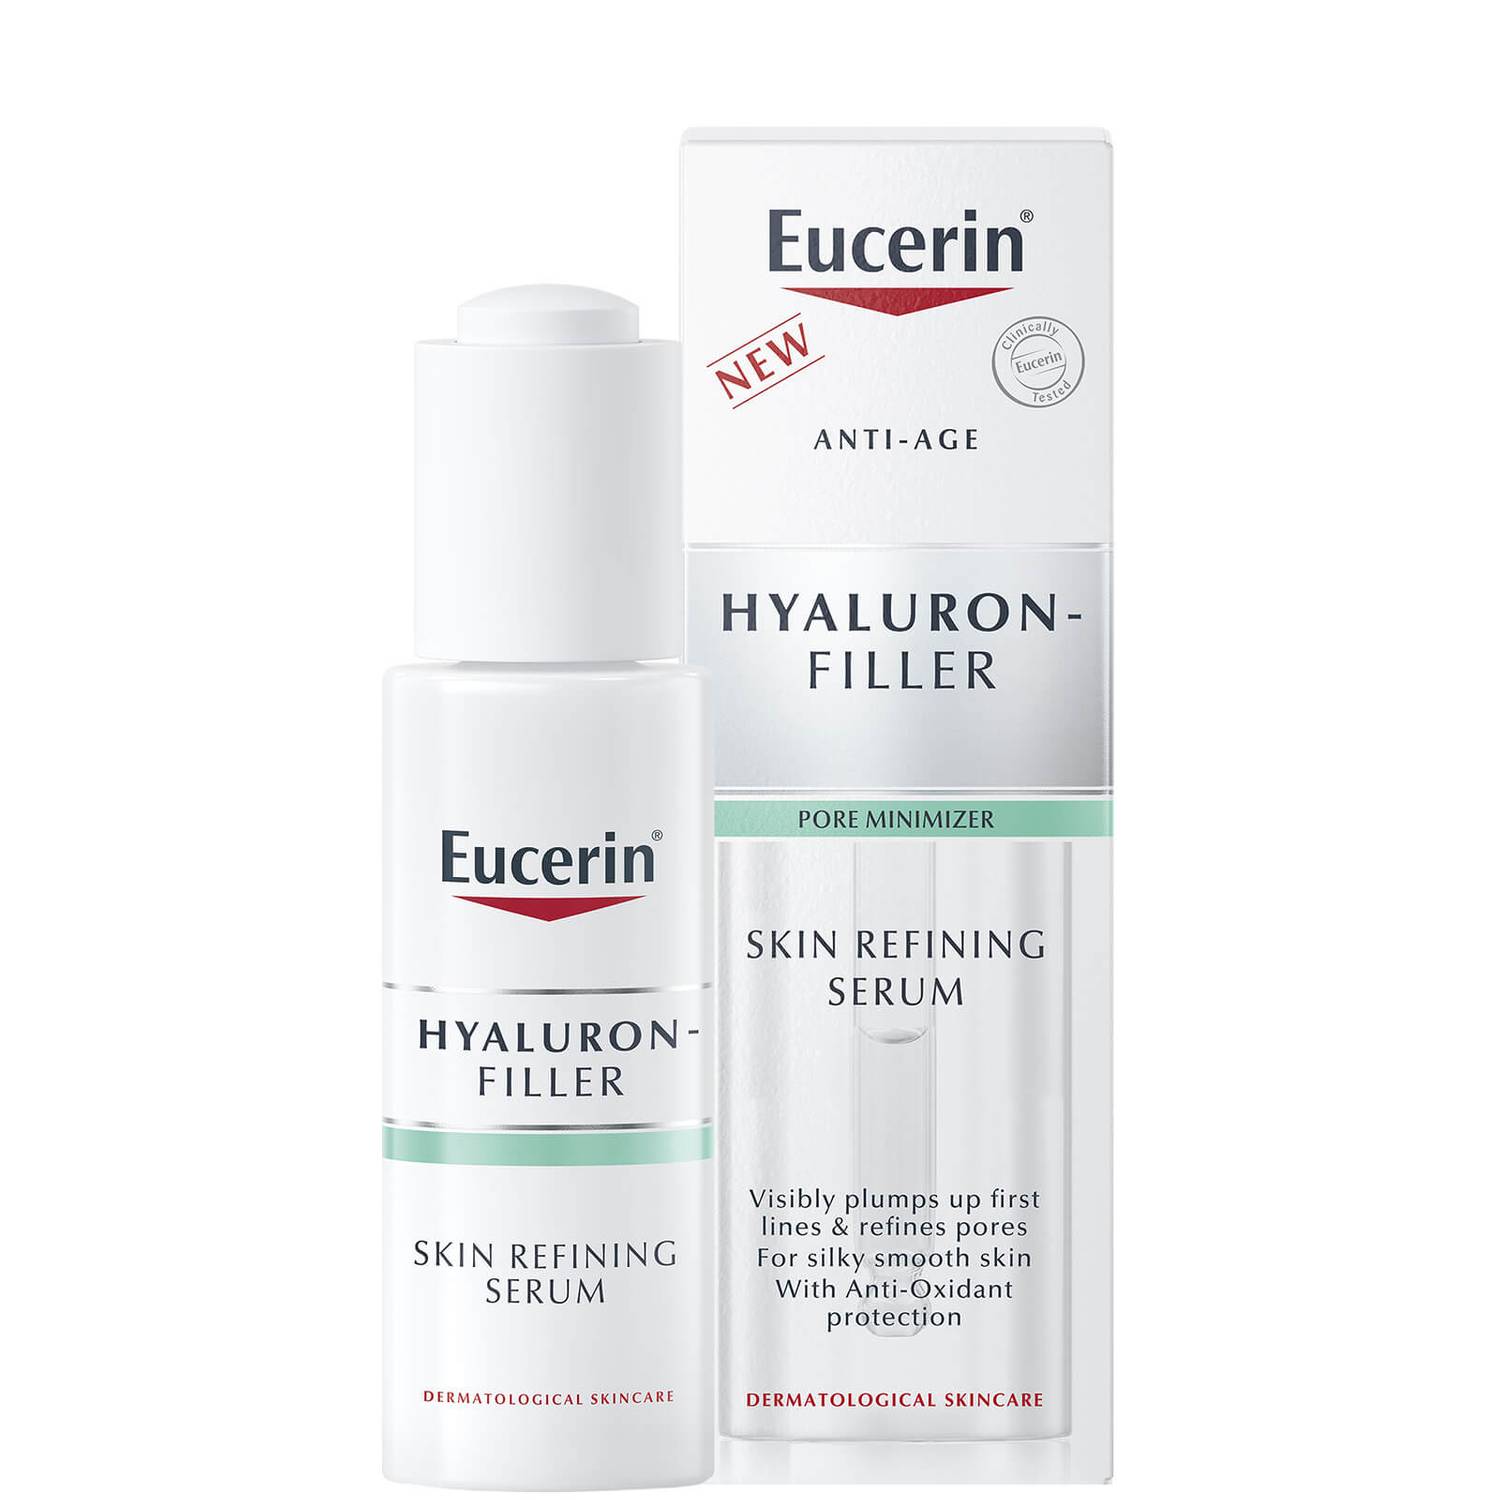 Eucerin Anti-Age Hyaluron-Filler Pore Minimizer Serum